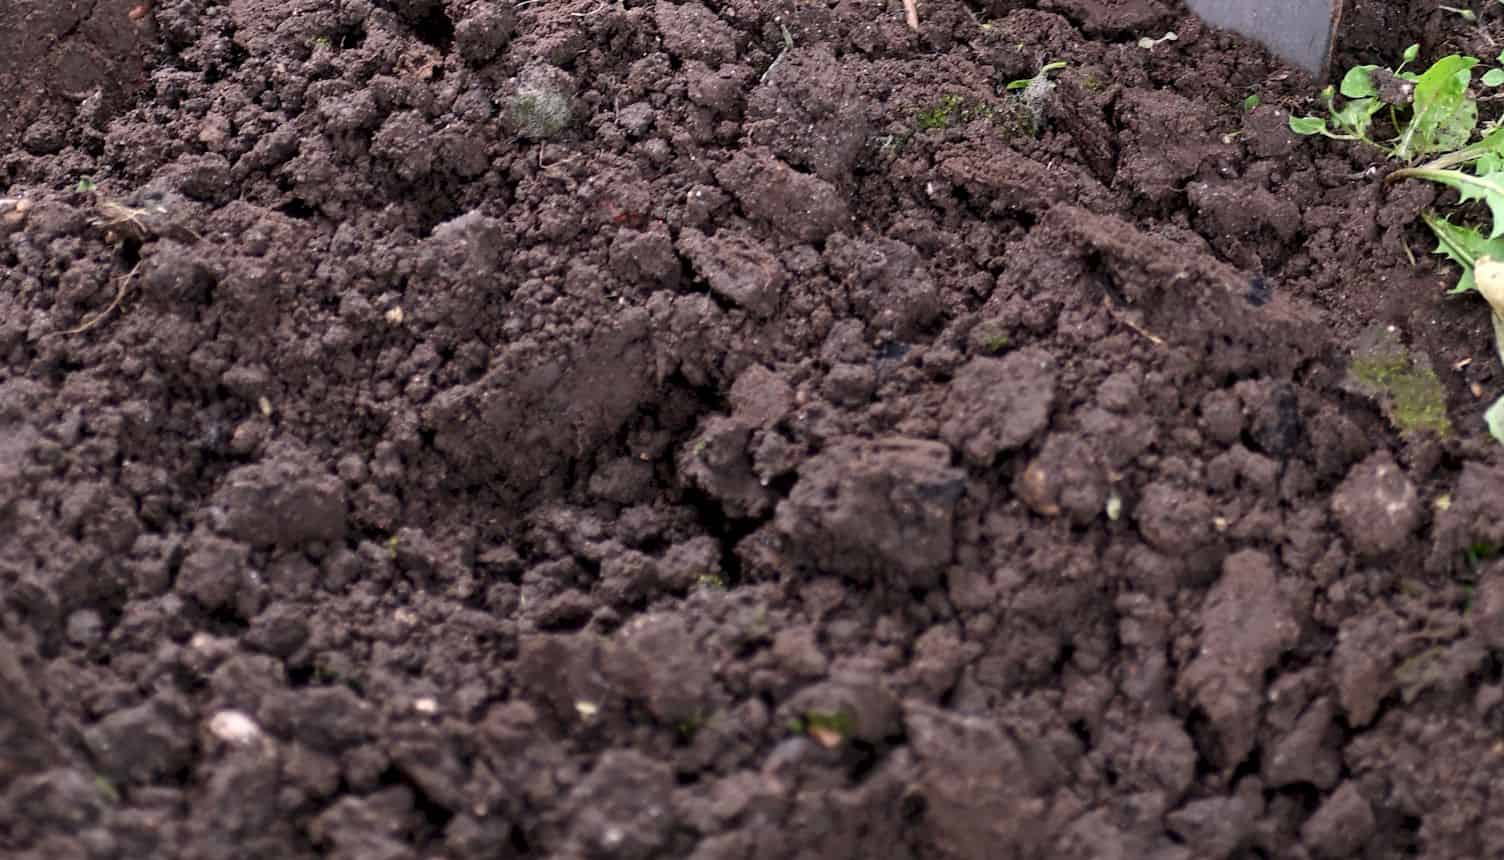 How to improve your garden soil